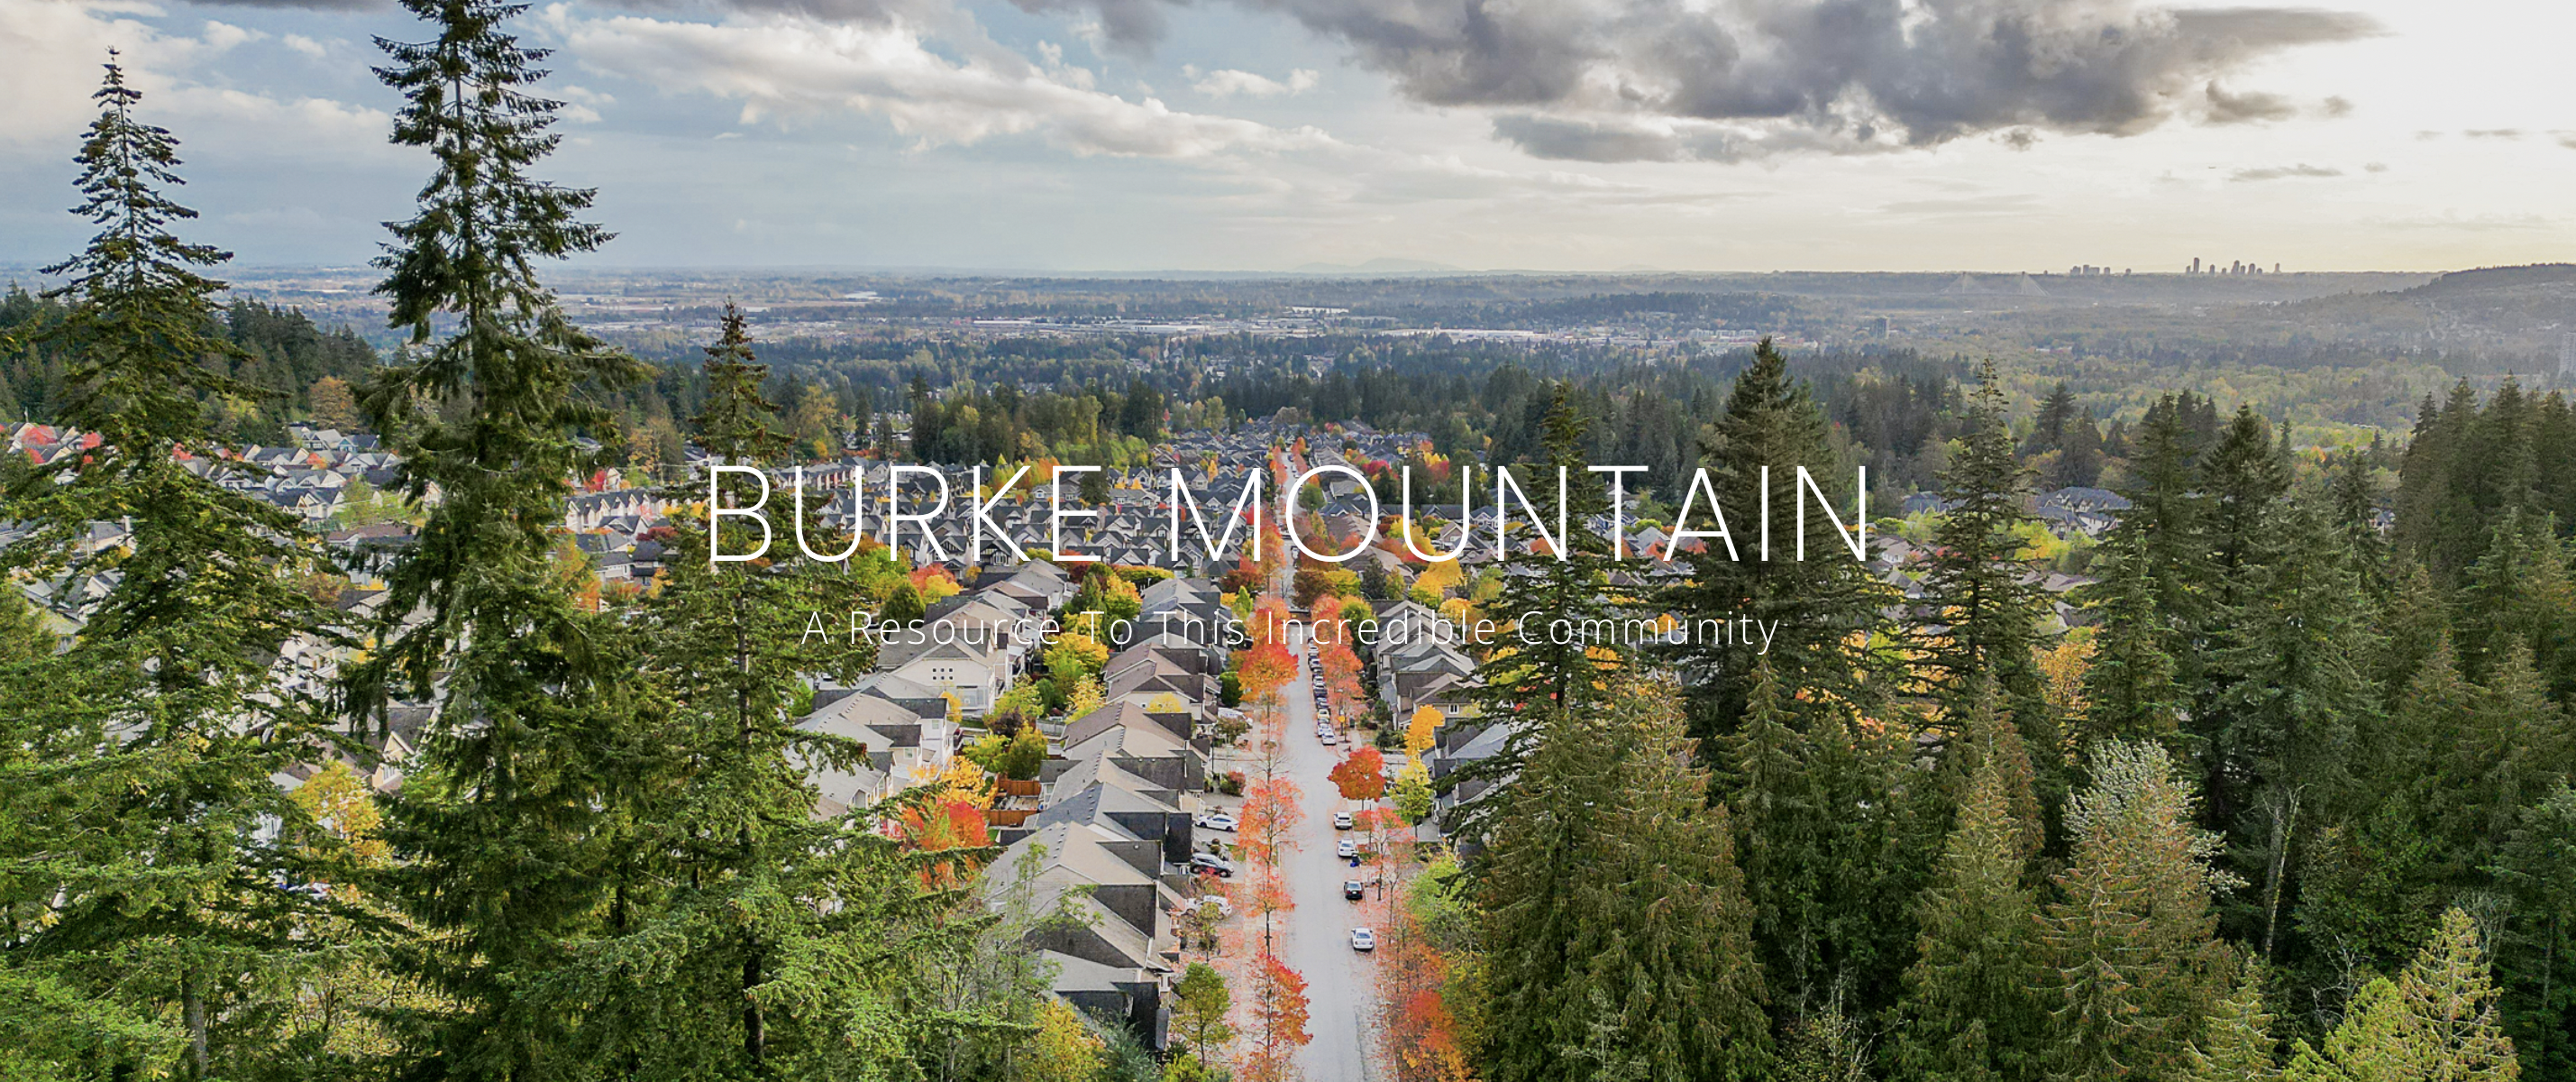 Burke Mountain Coquitlam Real Estate Presales Schools Parks